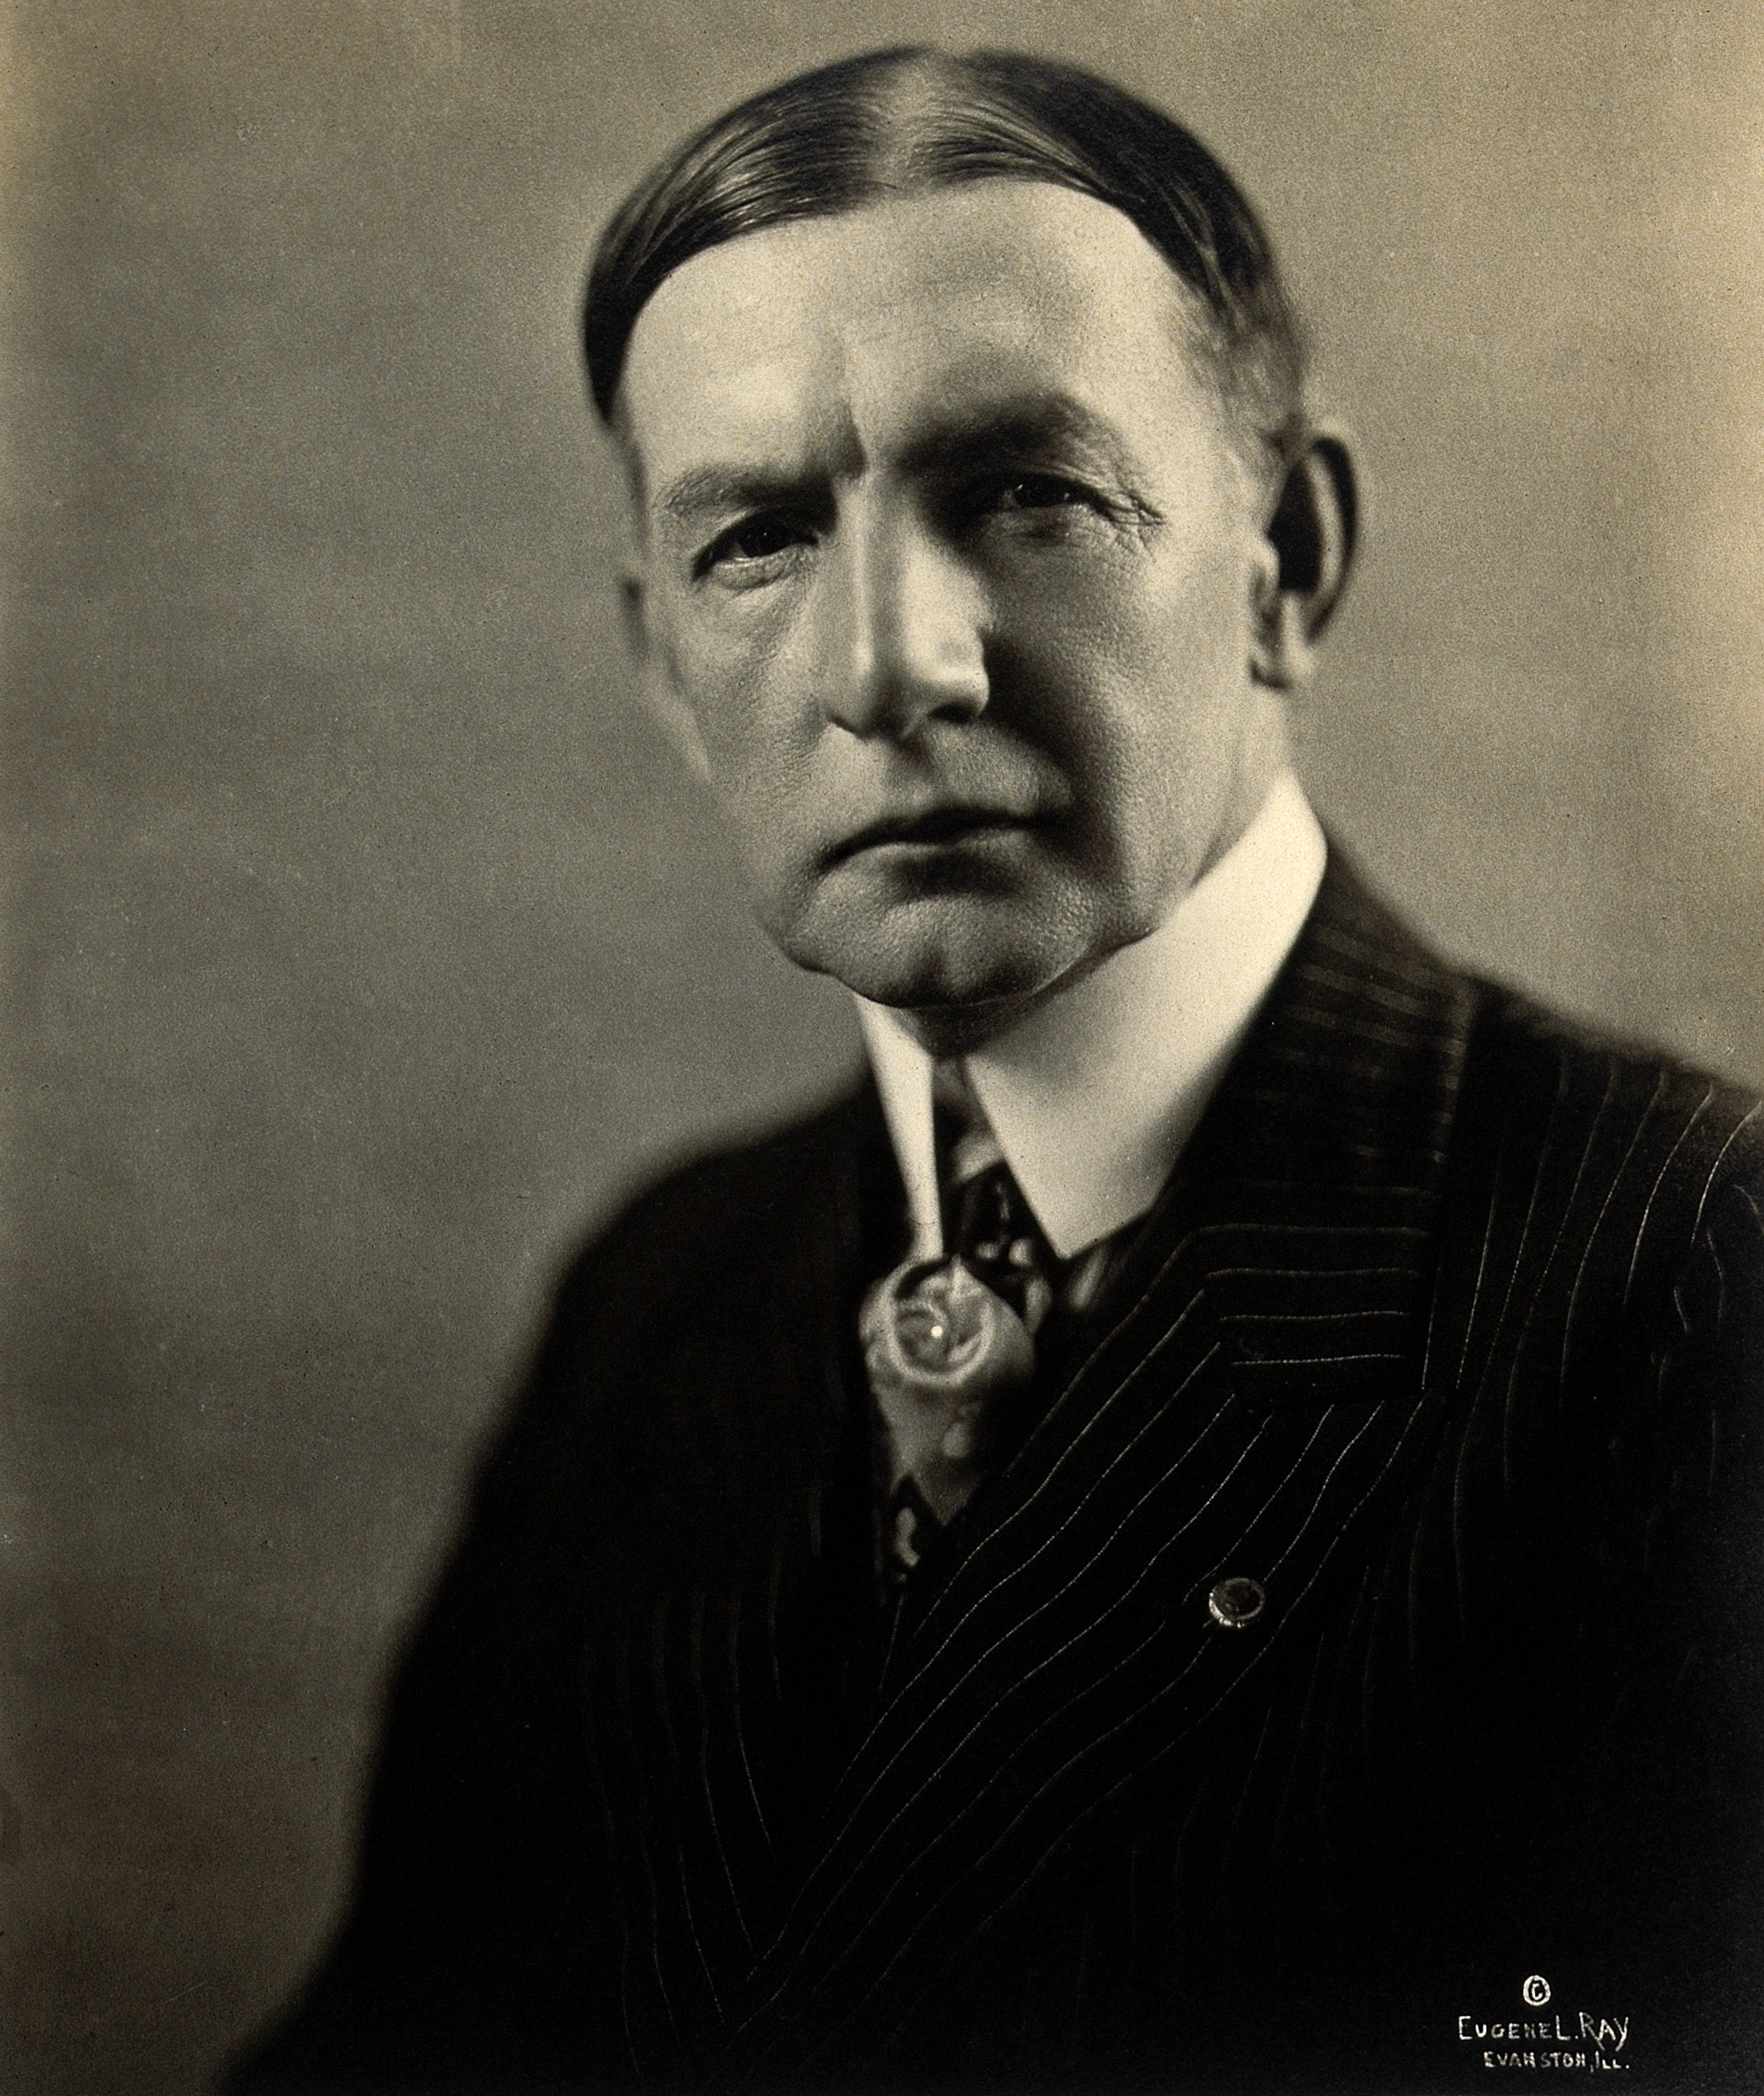 Gen. Davies, Ambassador 1929-31. Photograph by Eugene L. Ray Wellcome V0027807